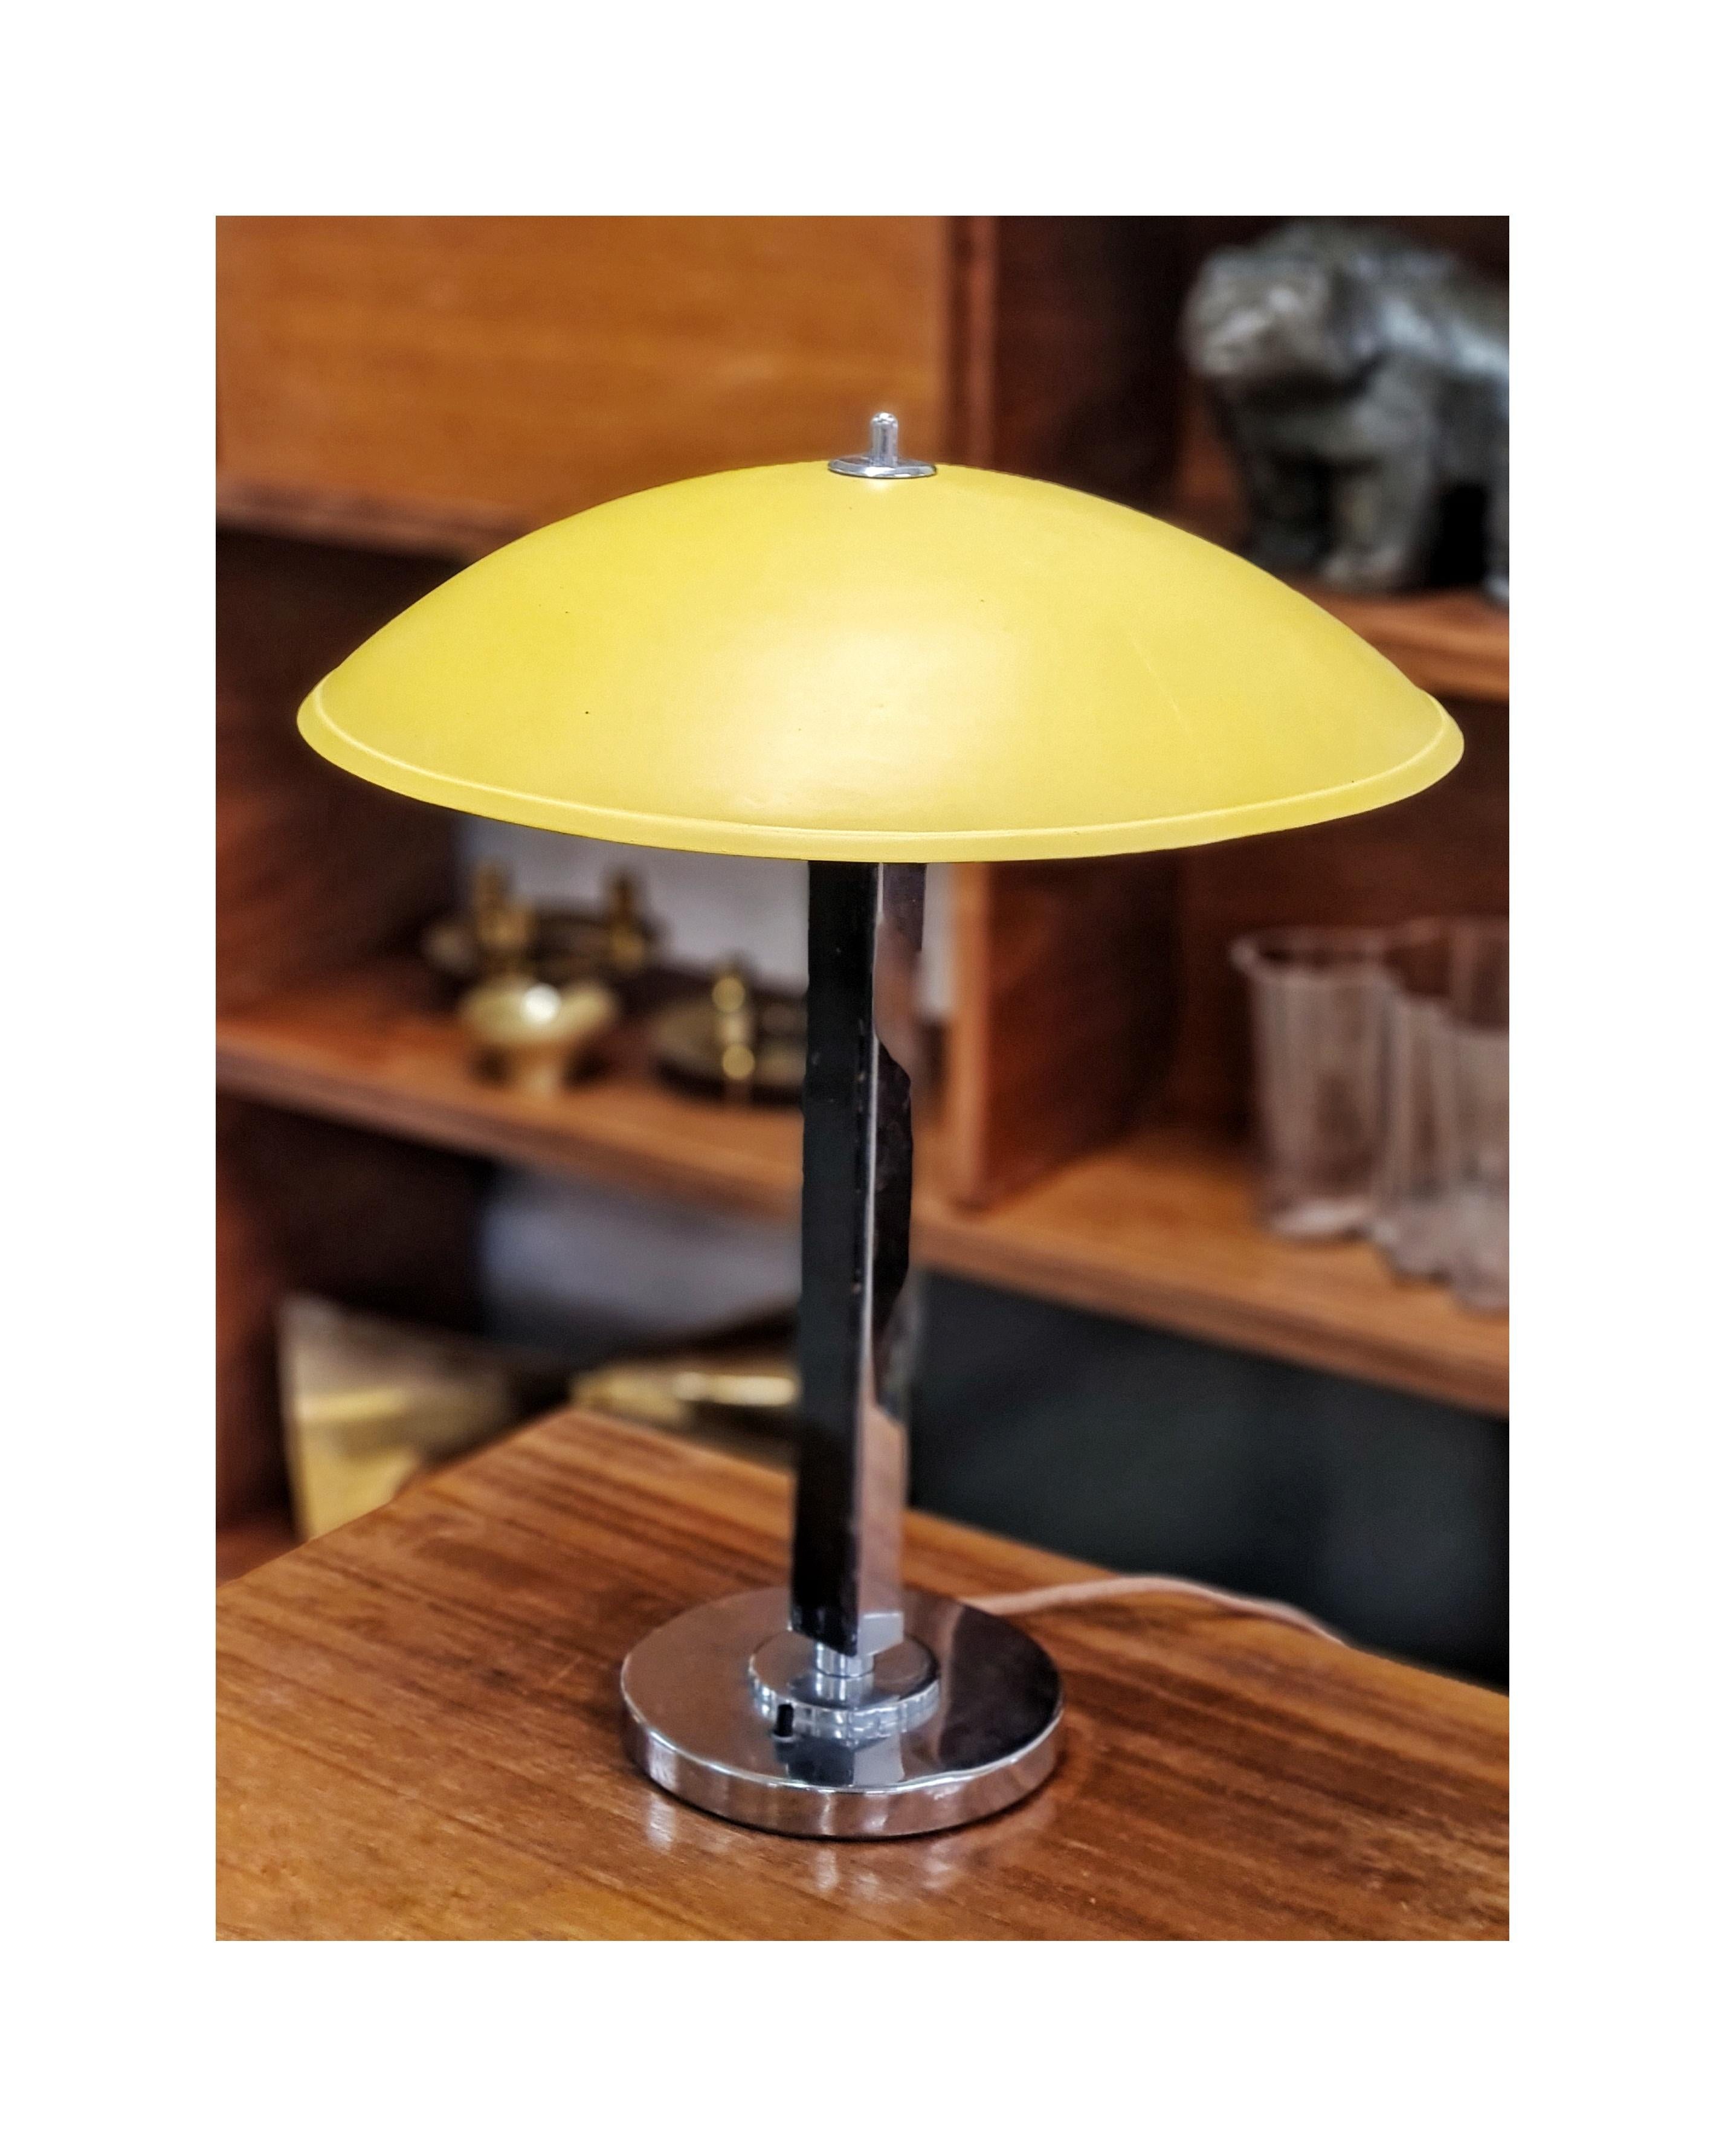 Exceedingly Rare Gunilla Jung Table Lamp Model 2004 for Orno For Sale 3